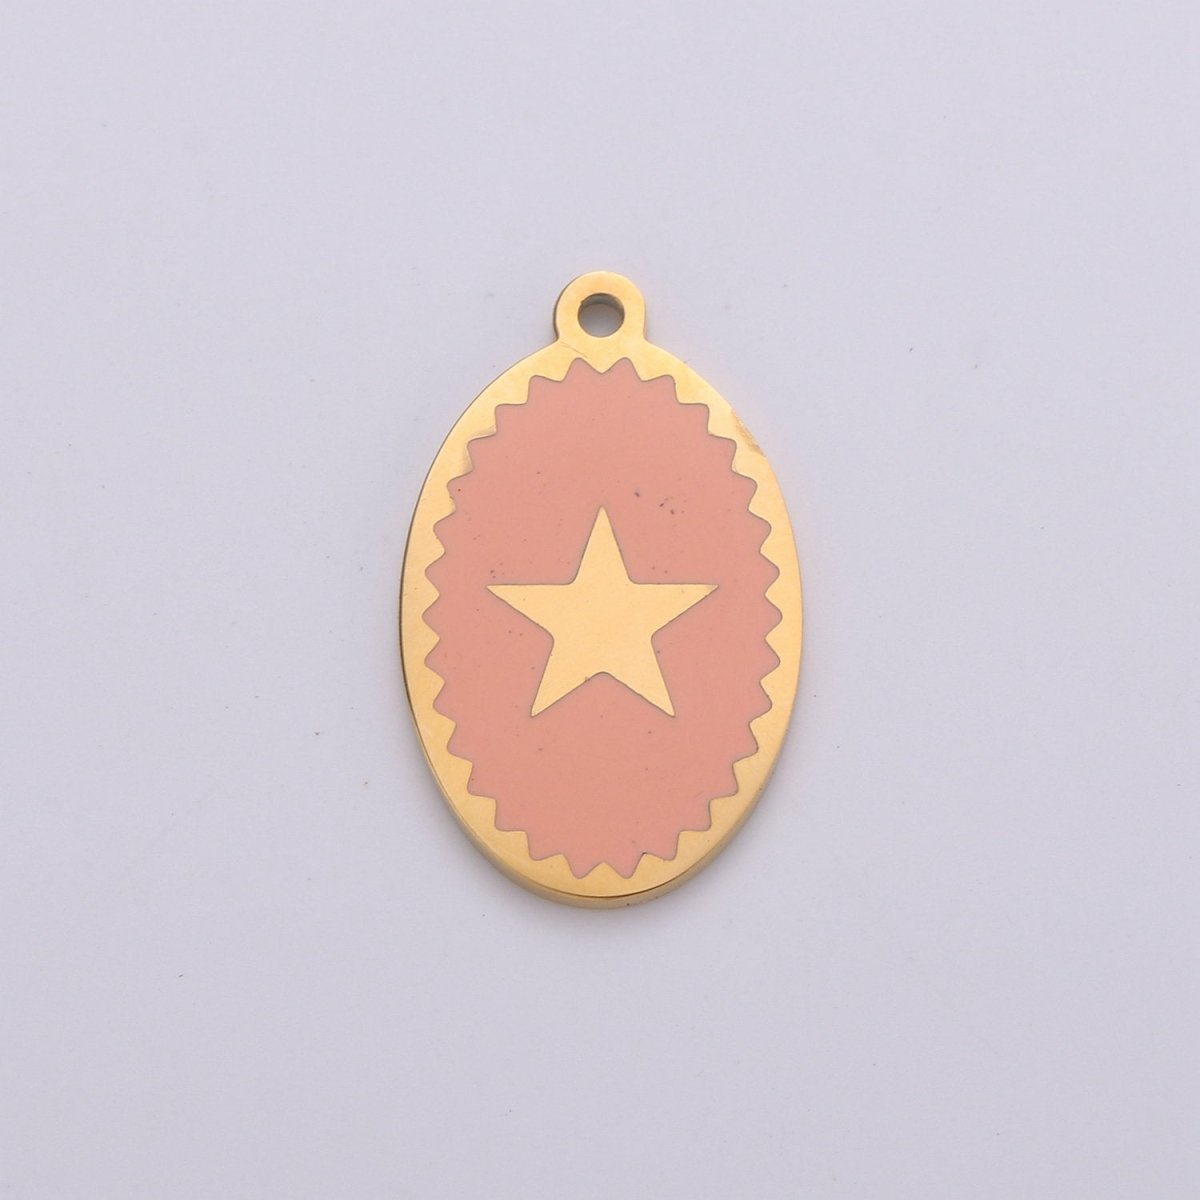 Enamel Star Charm 24k Gold Filled Star Charm Pink Teal black White Enamel Star Celestial Jewelry Minimalist Necklace Bracelet Component E688-E-691 - DLUXCA